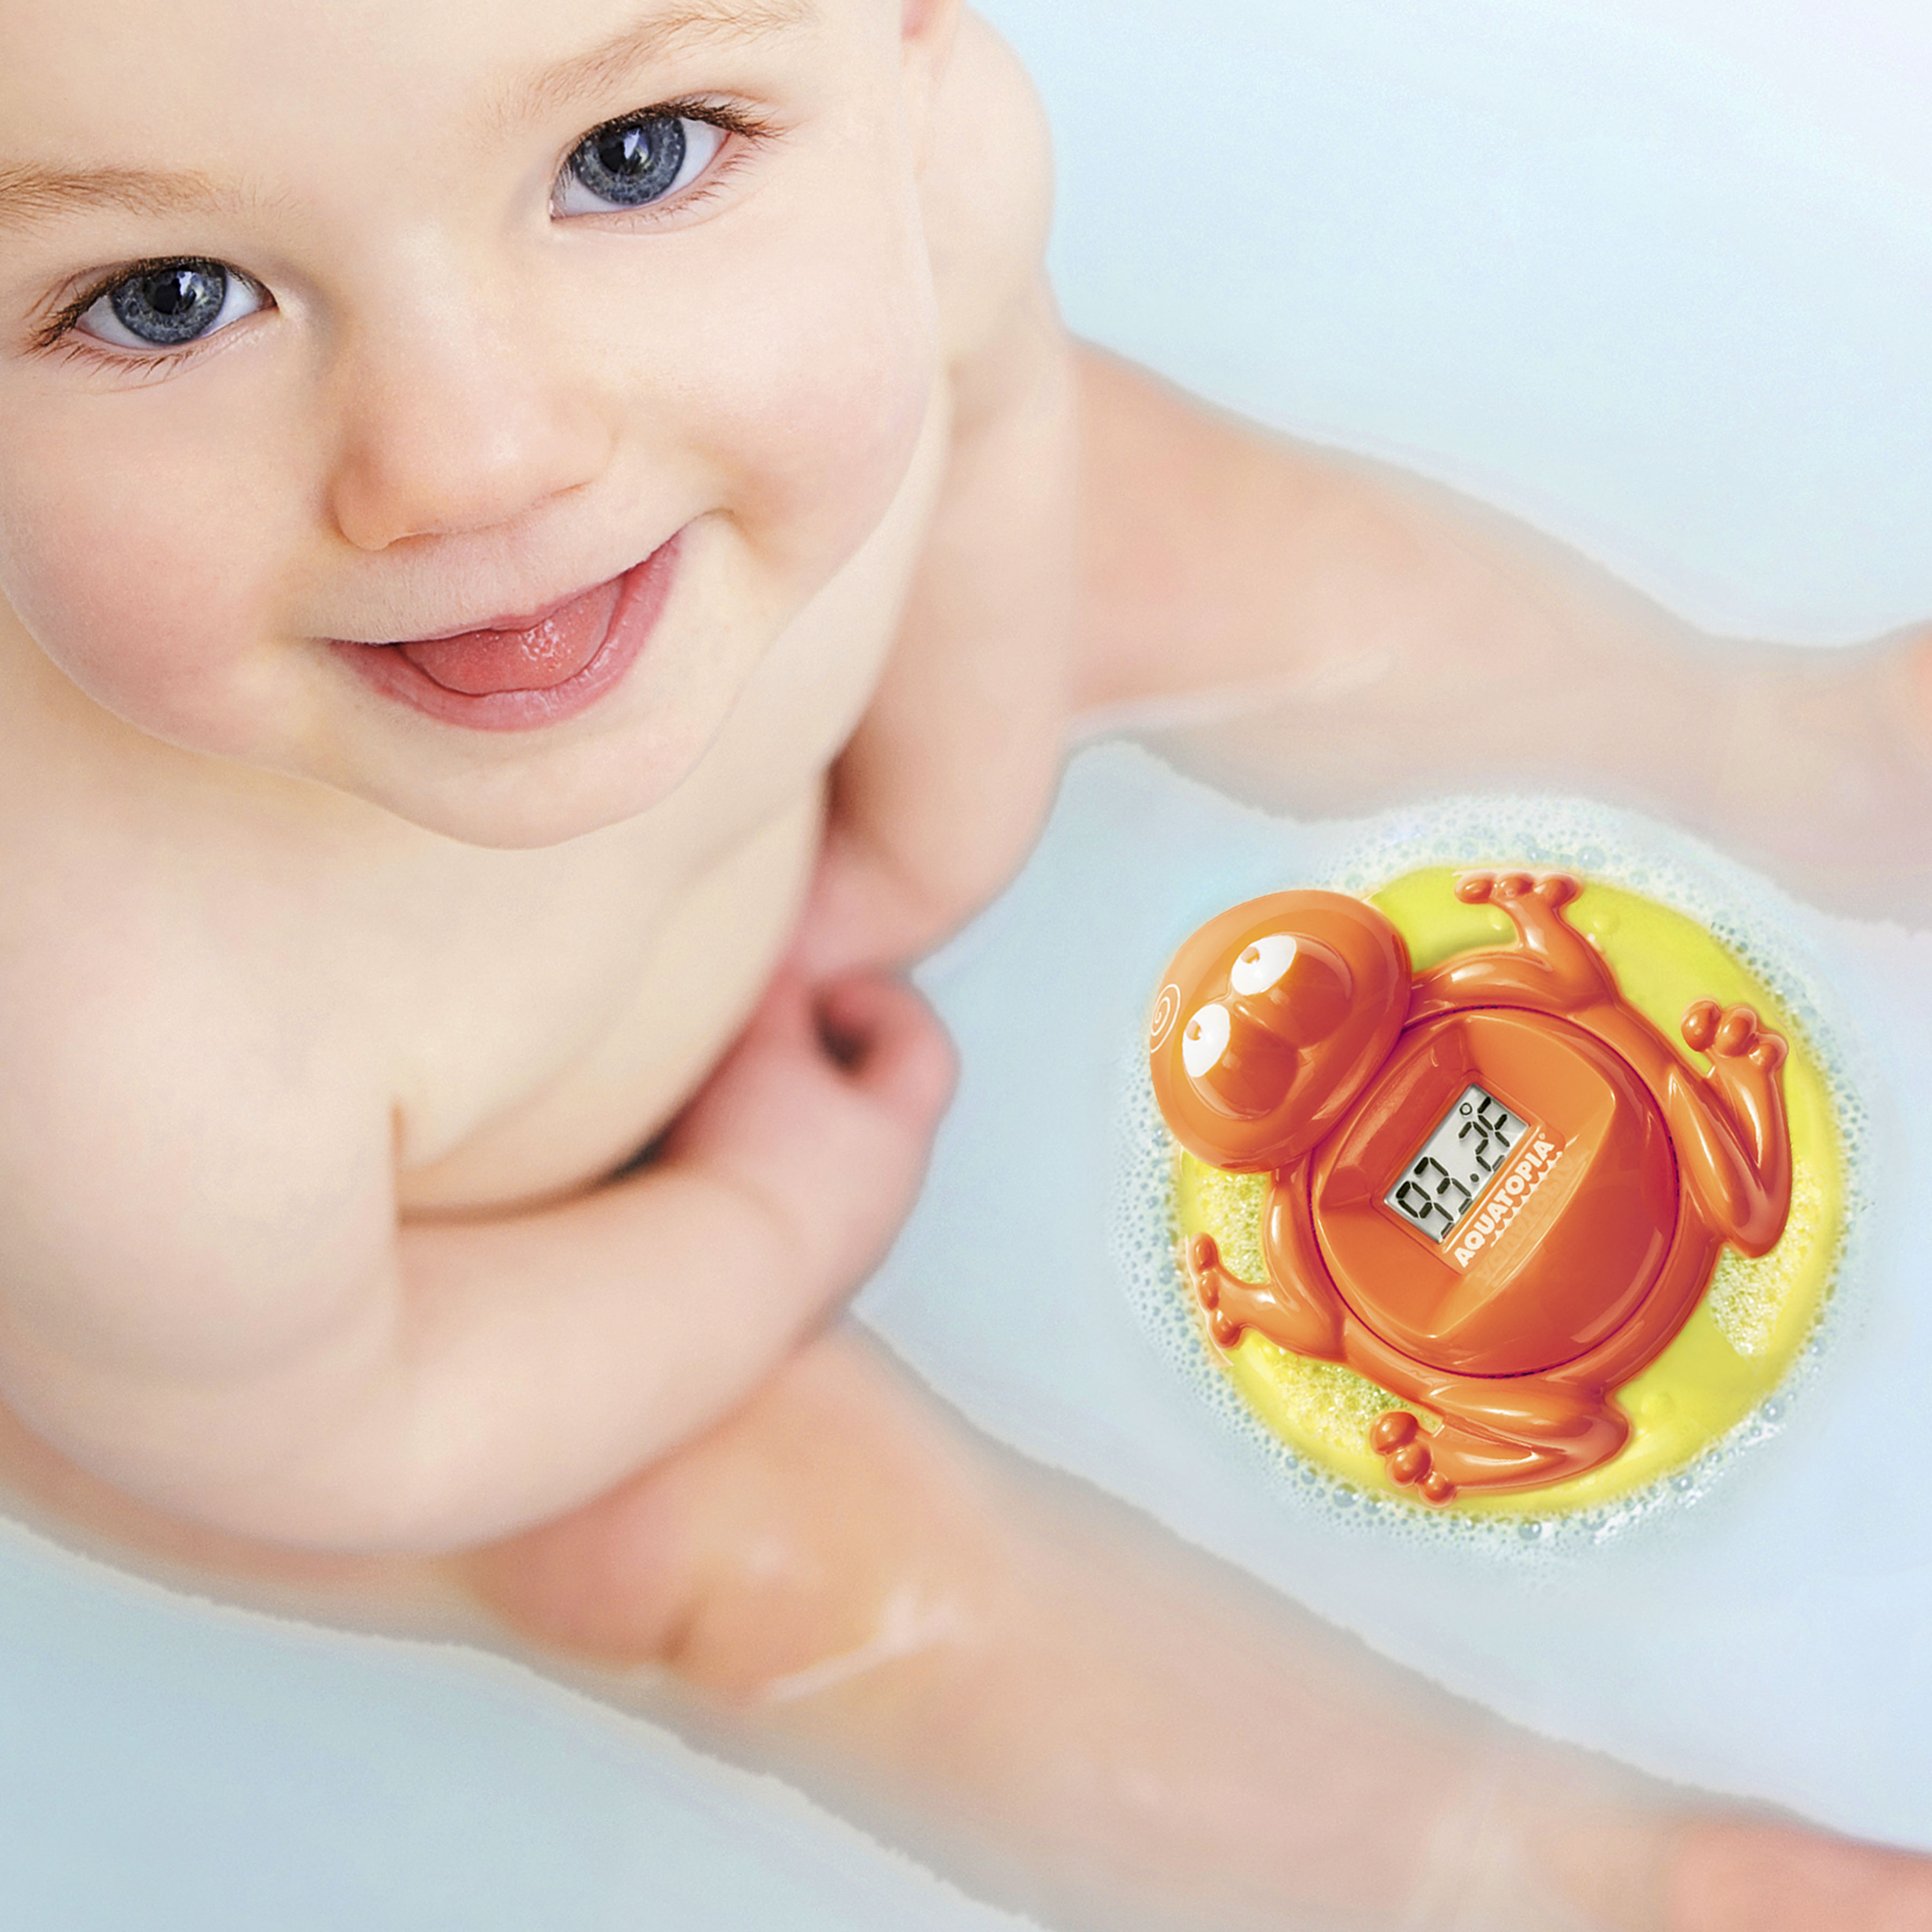 Aquatopia Bath Thermometer, Digital Audible Alarm, Orange - image 3 of 6